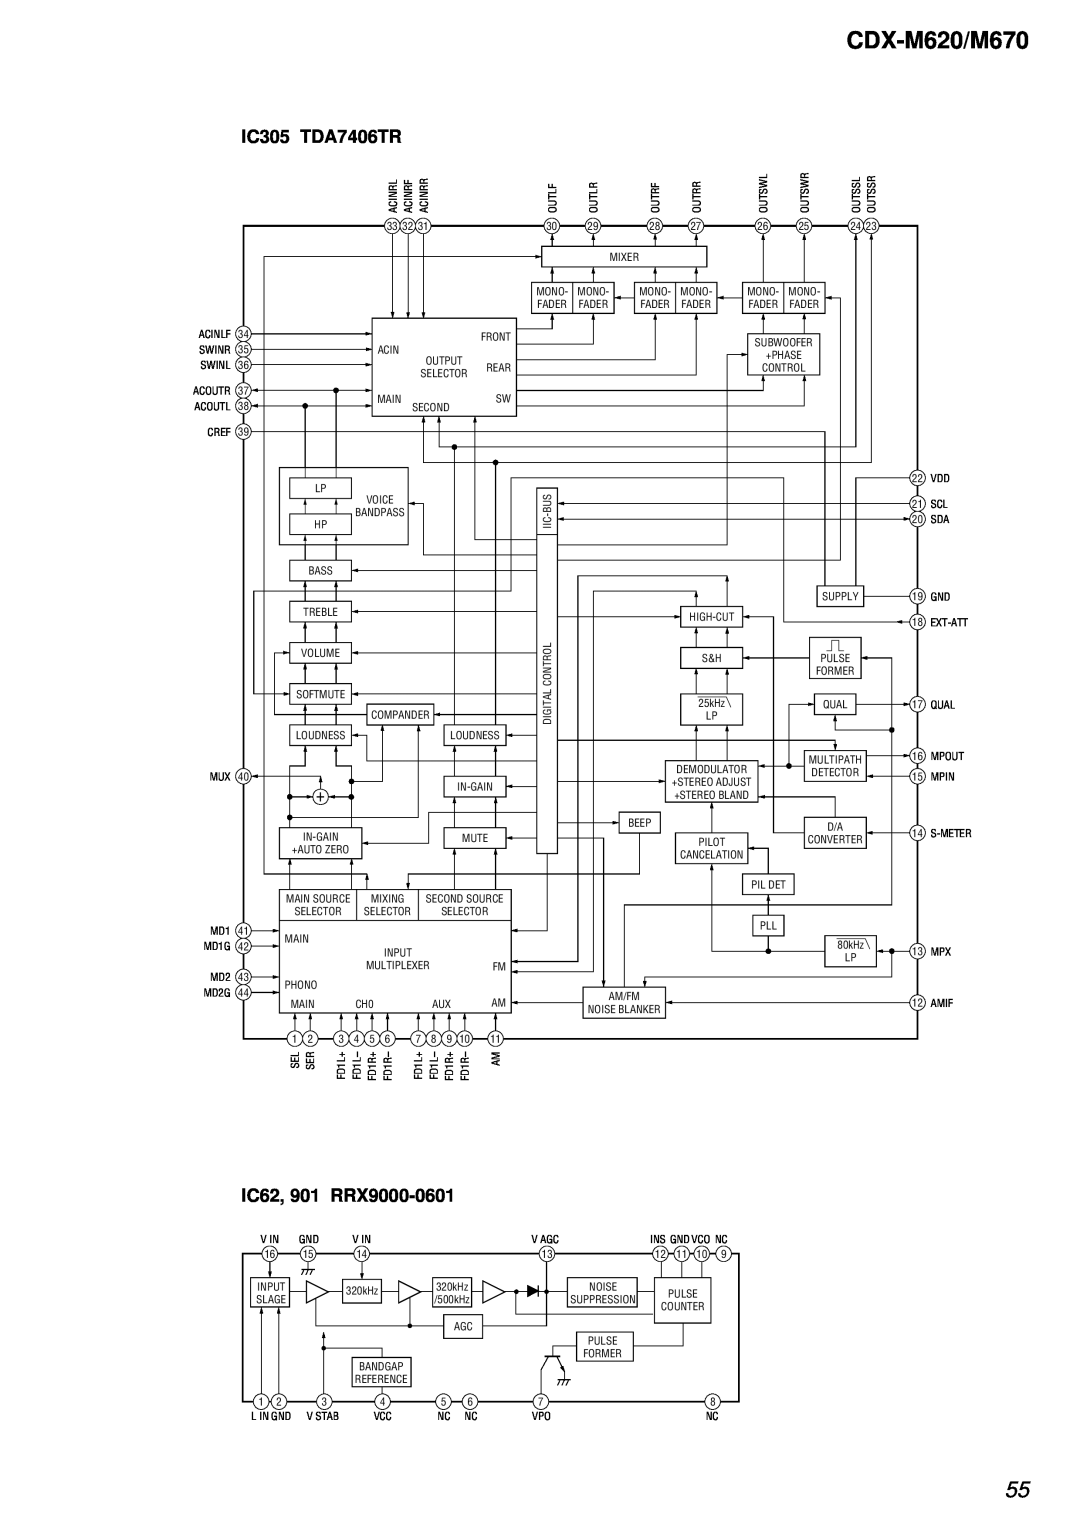 Sony Ericsson service manual IC305 TDA7406TR, IC62, 901 RRX9000-0601, CDX-M620/M670 